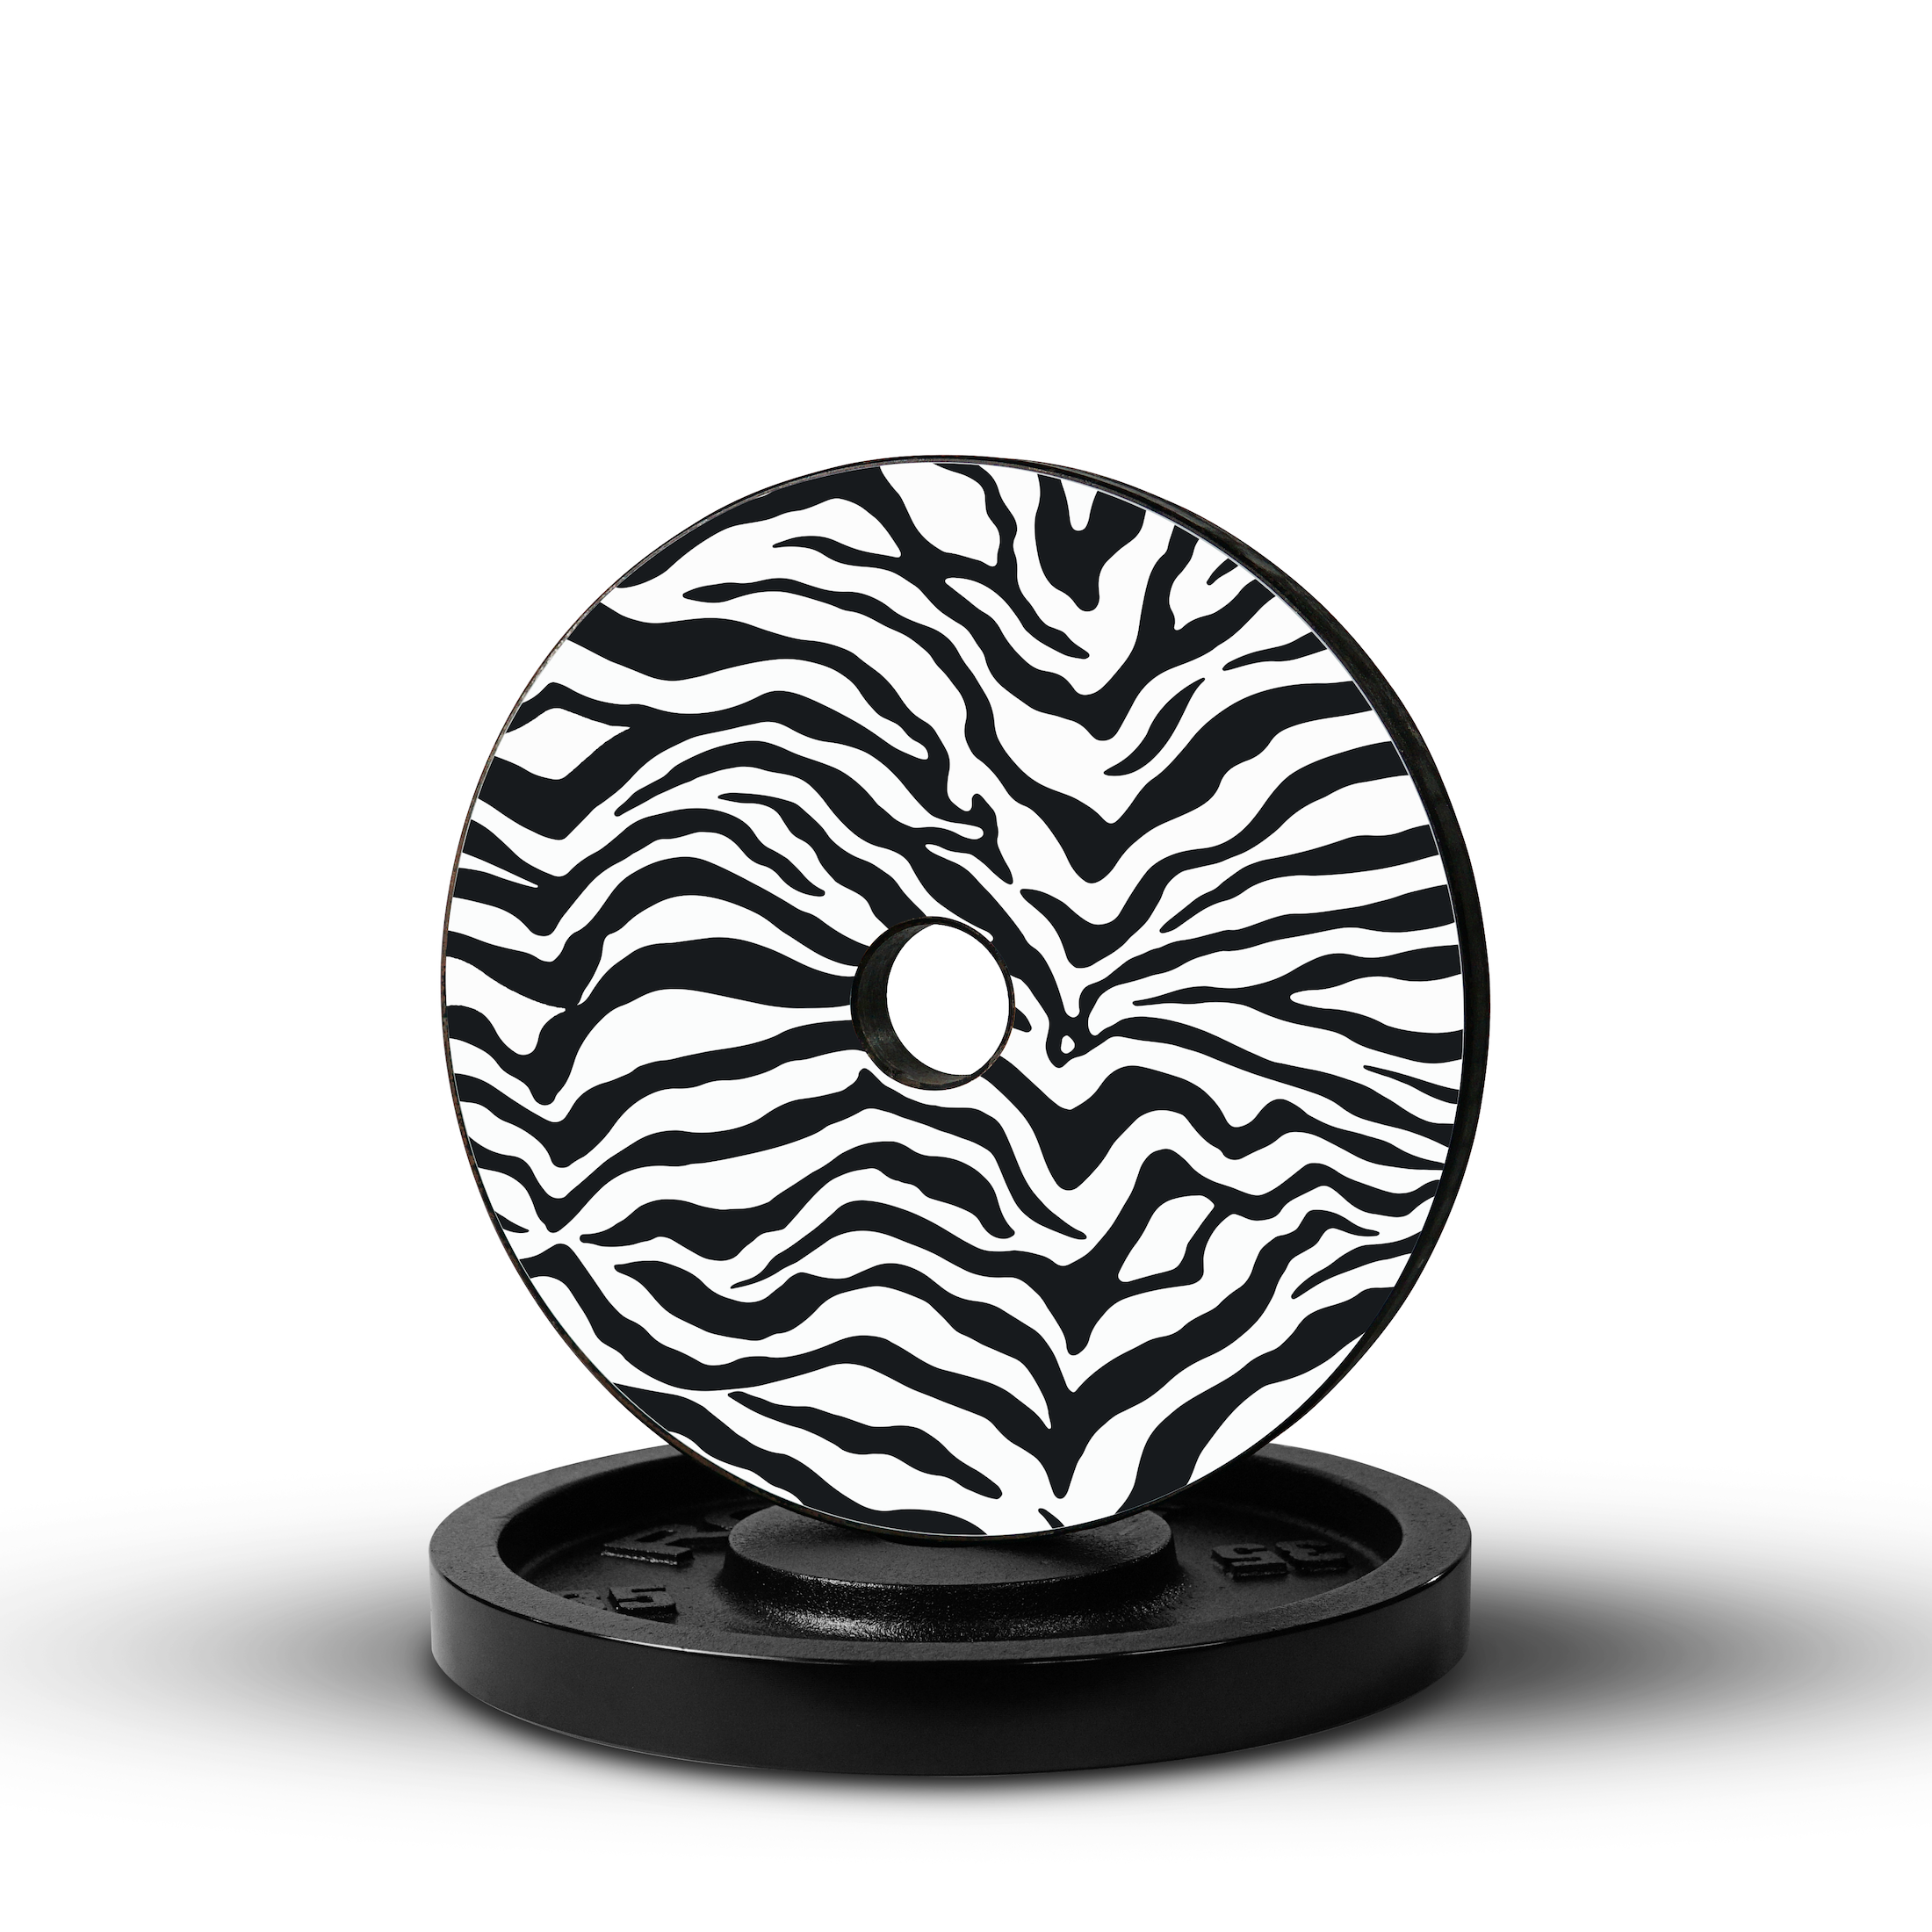 Zebra Print - For Iron Plates